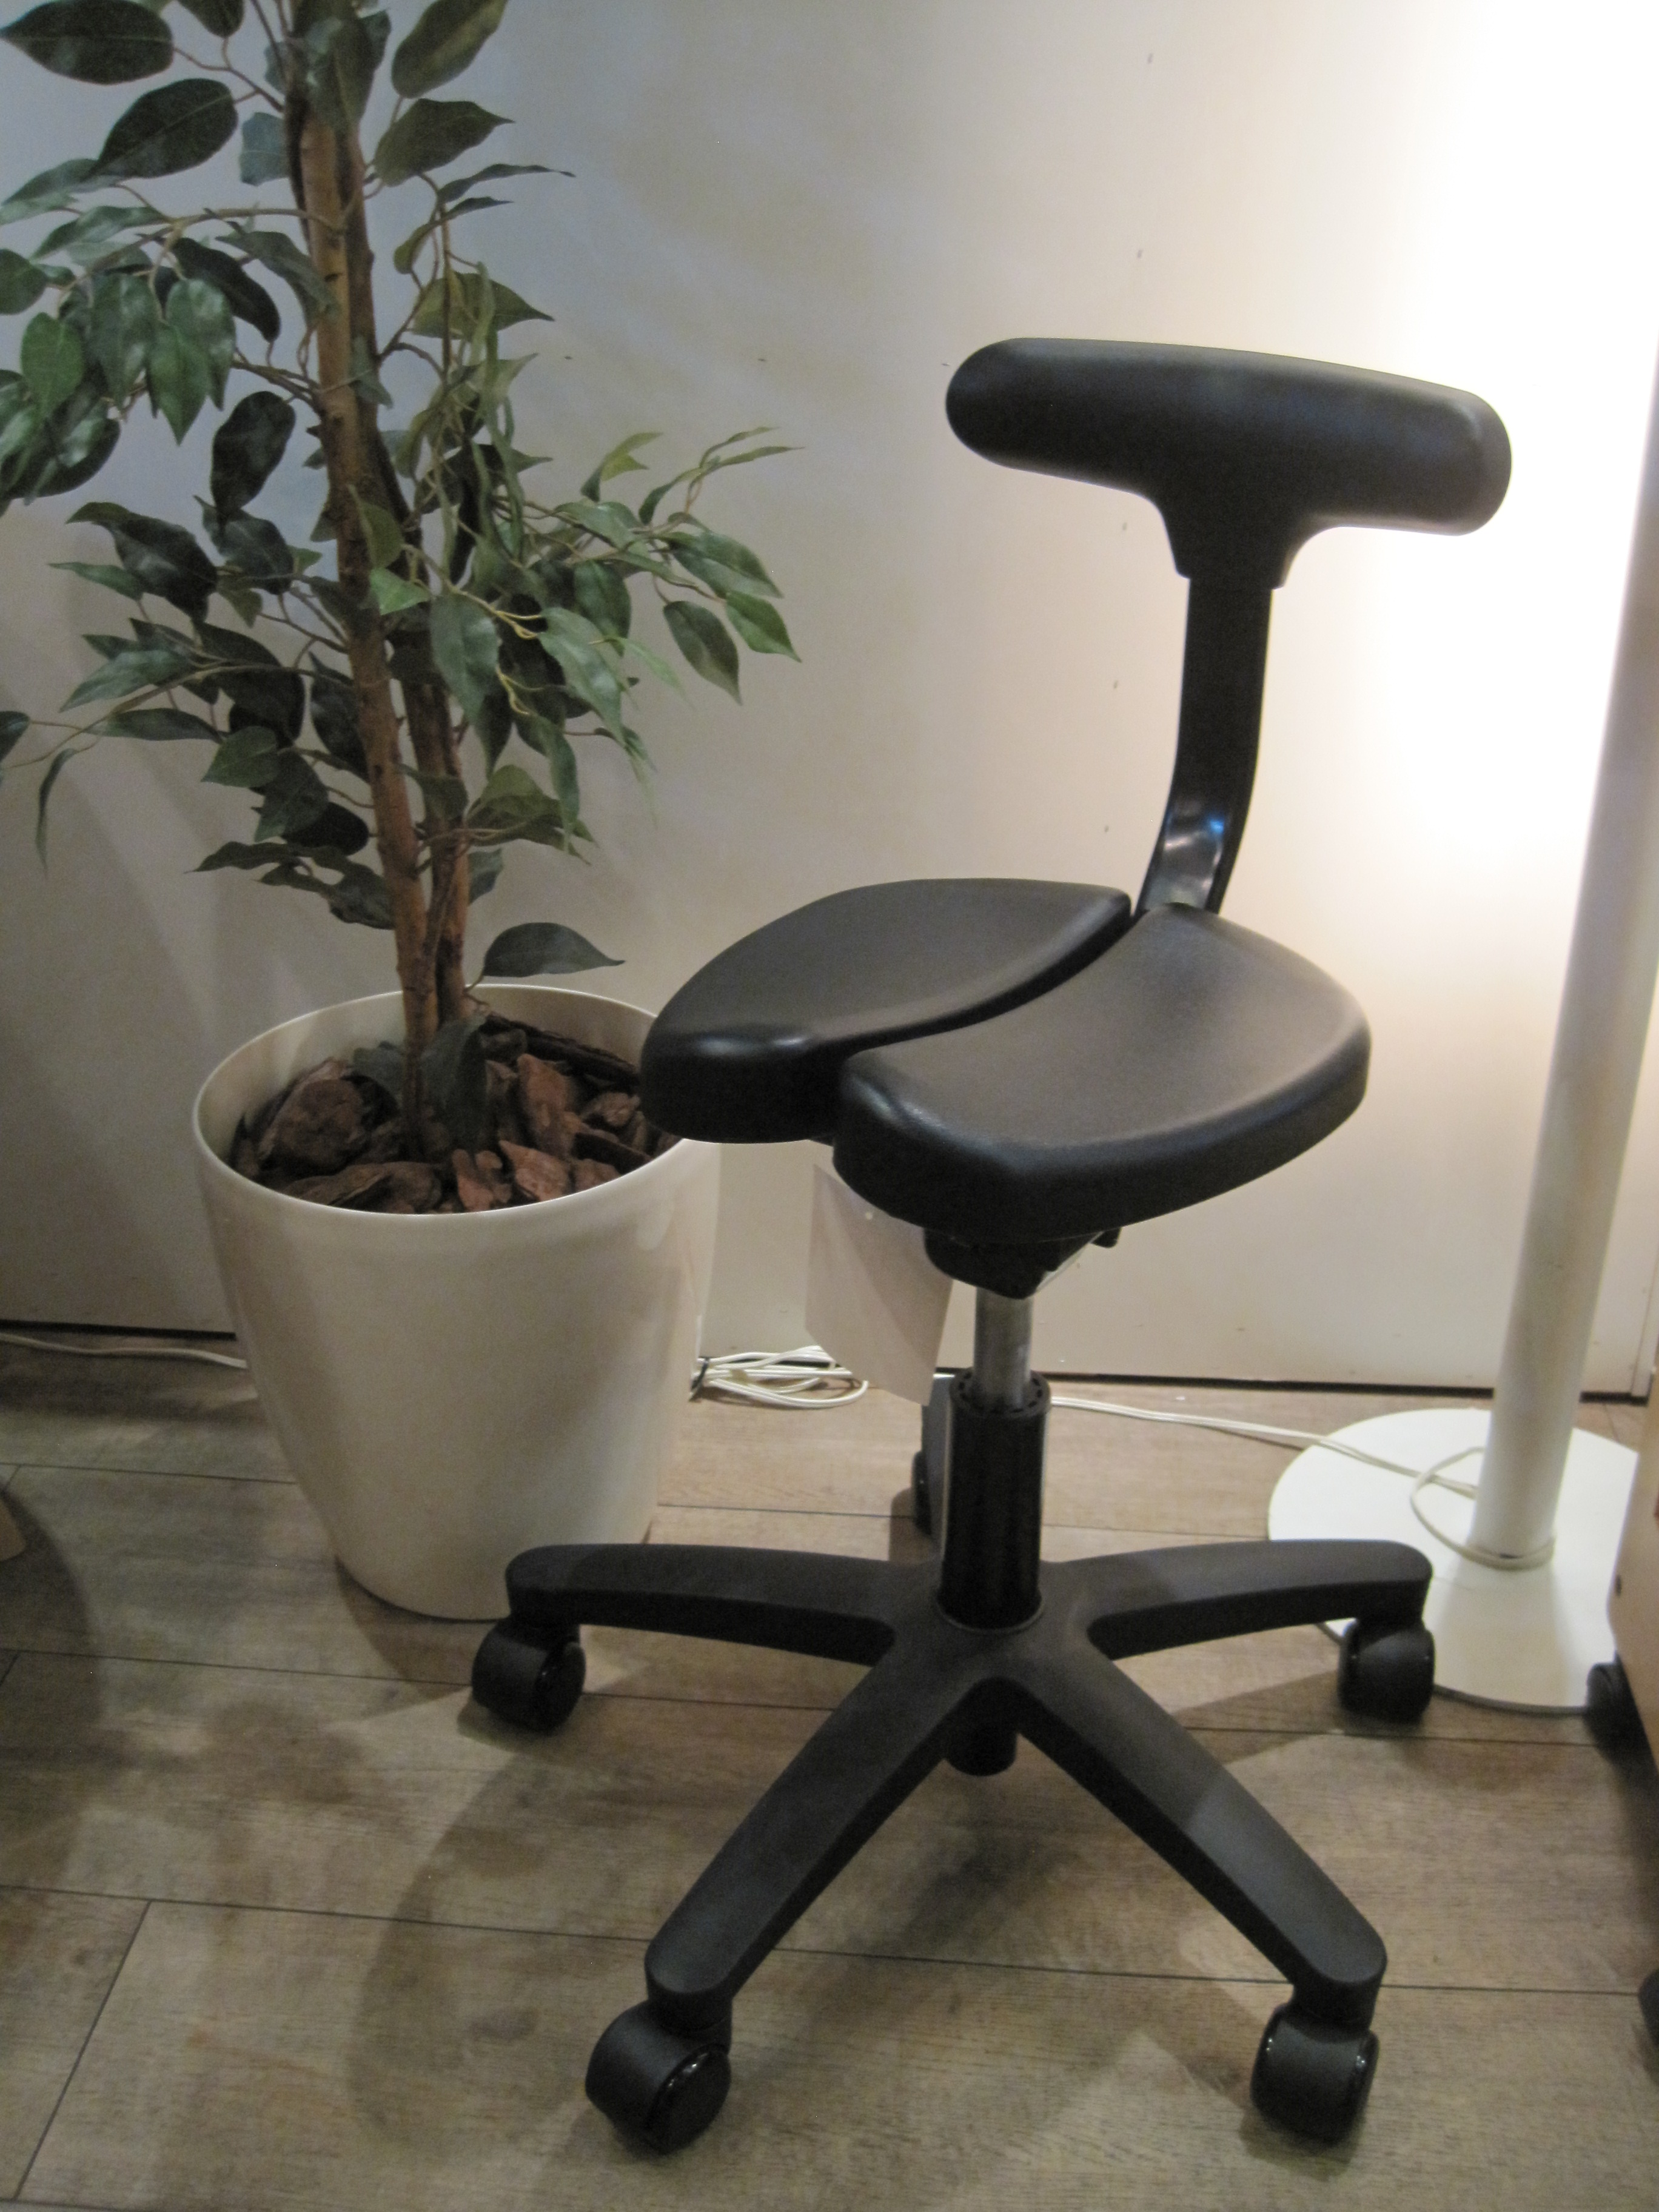 ayur-chair(アーユルチェアー) 姿勢矯正チェア“オクトパス” 腰痛改善